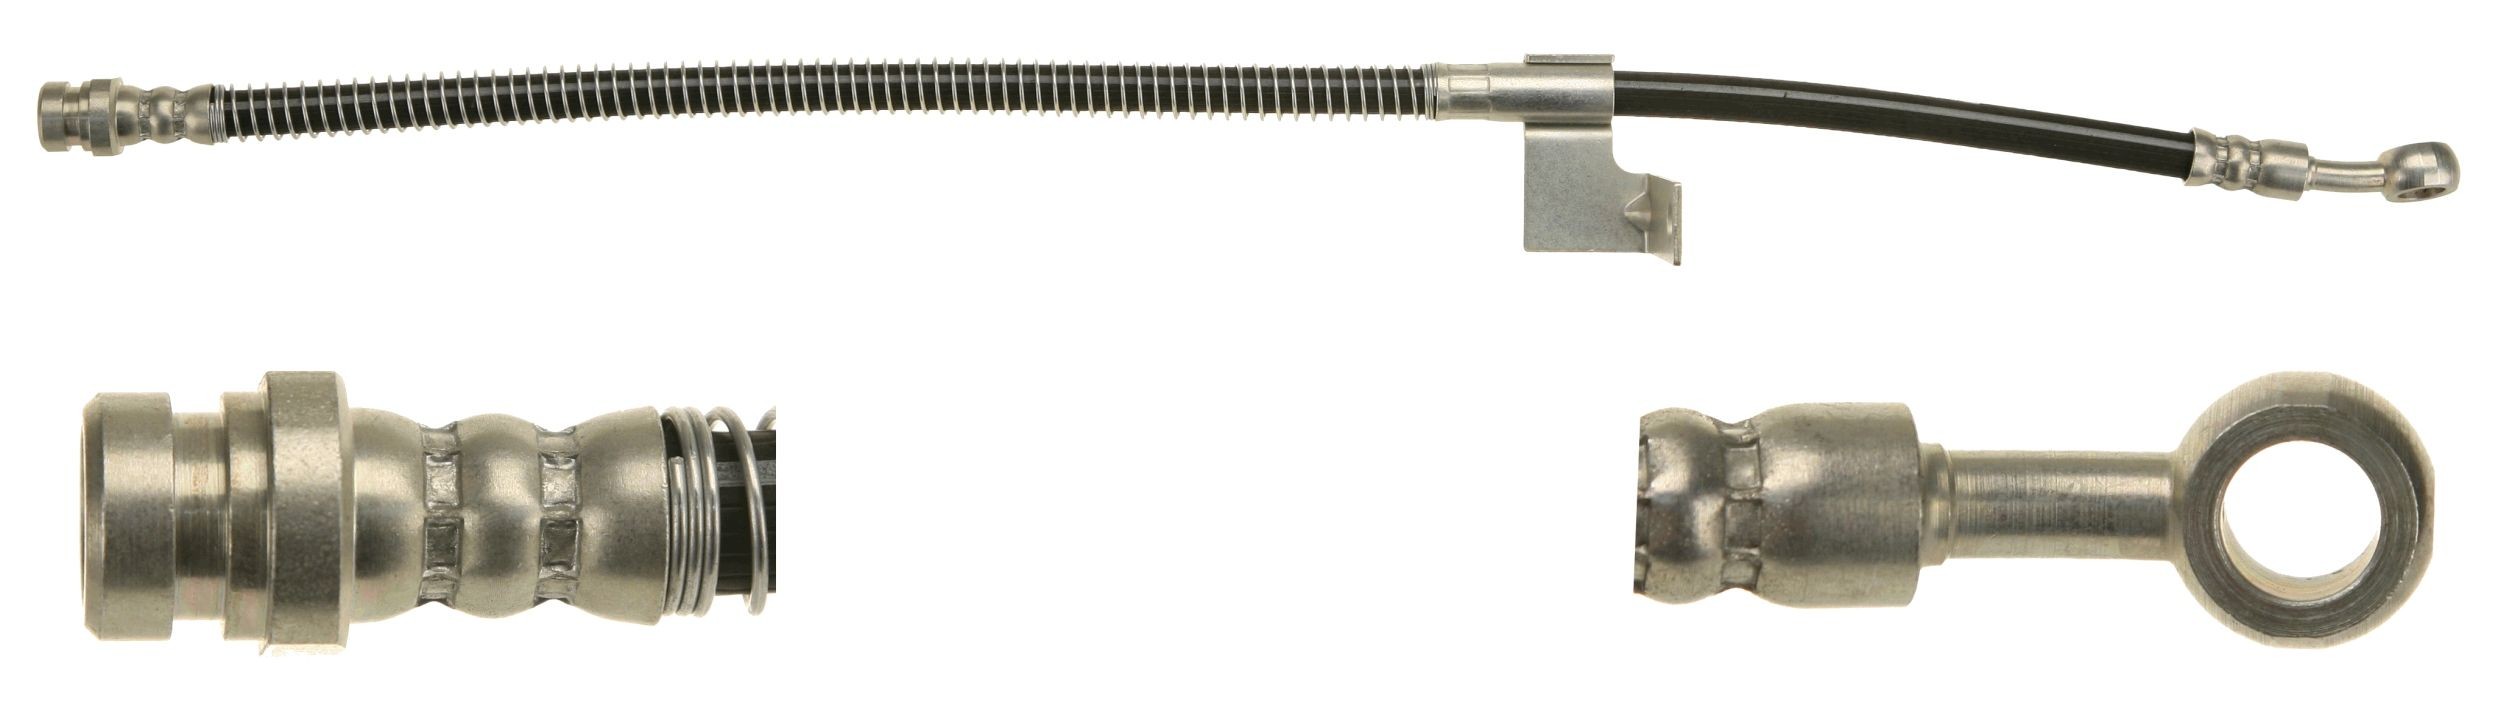 TRW 515 mm, M10x1, Internal Thread Length: 515mm, Thread Size 1: M10x1, Thread Size 2: Banjo Brake line PHD607 buy